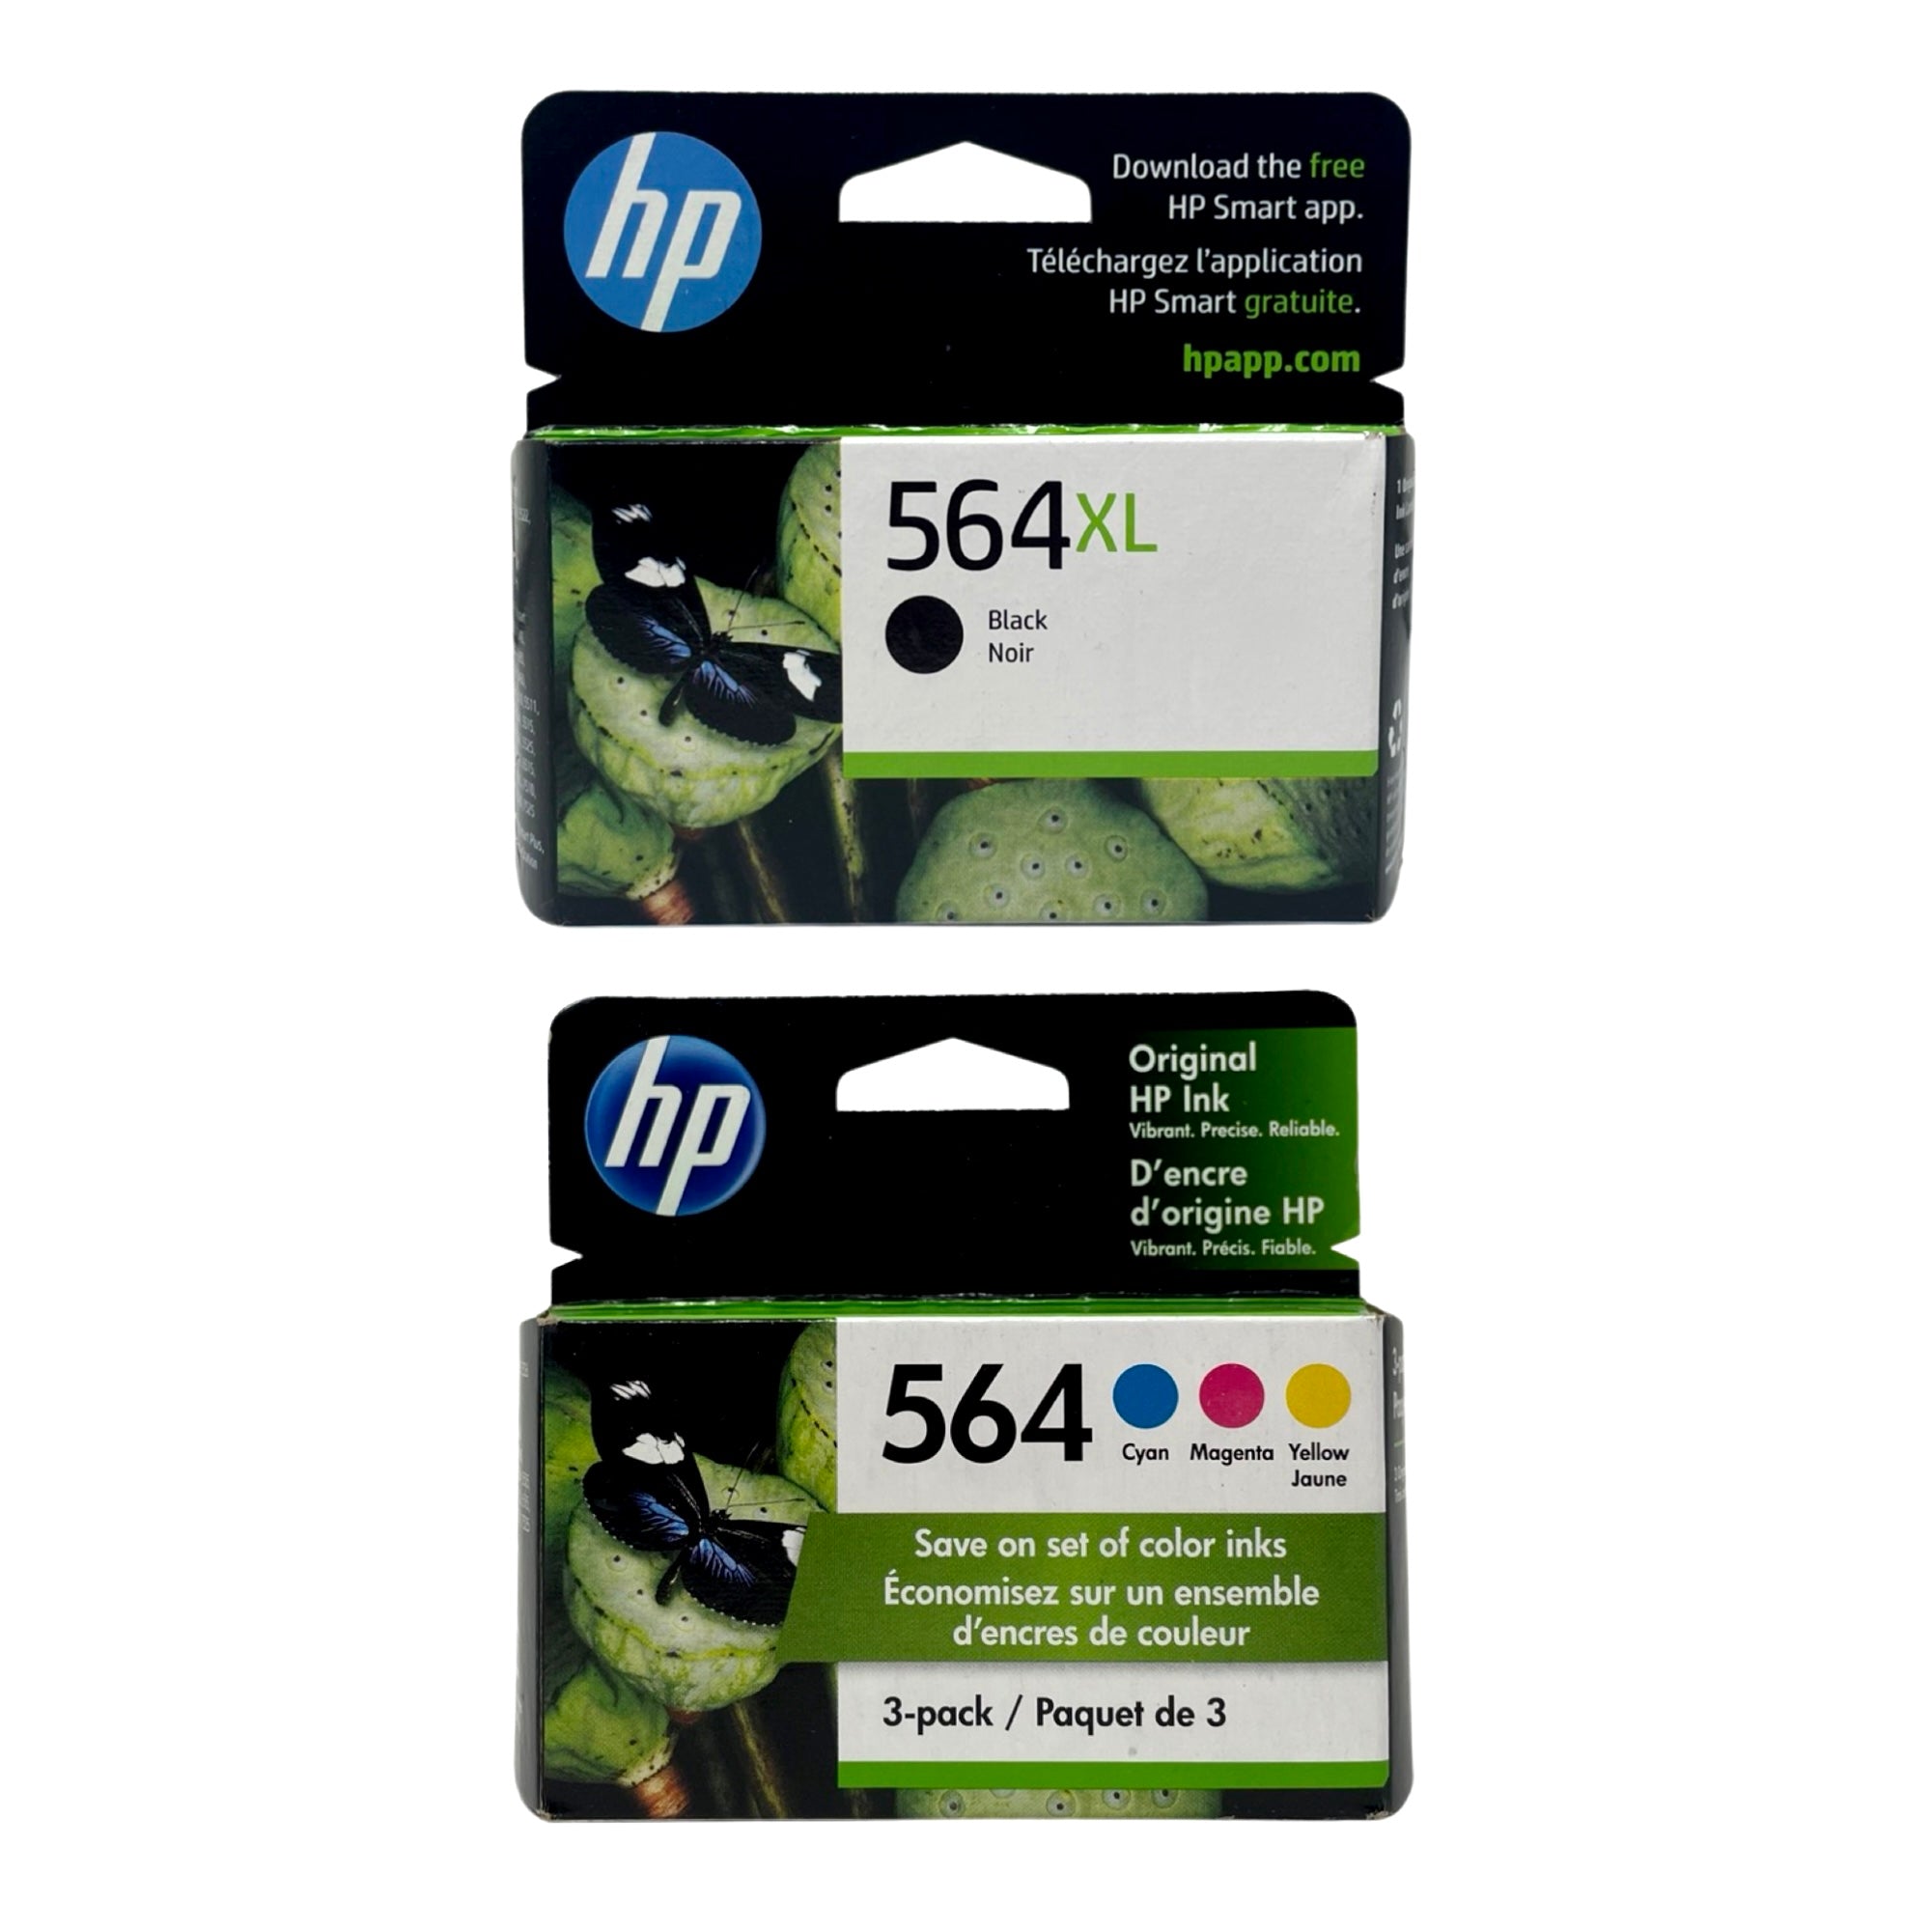 HP 564XL / HP 564 Ink SET - Combo 4 Pack - High Yield Black / Standard Yield Cyan Magenta Yellow - Original HP Ink Cartridges